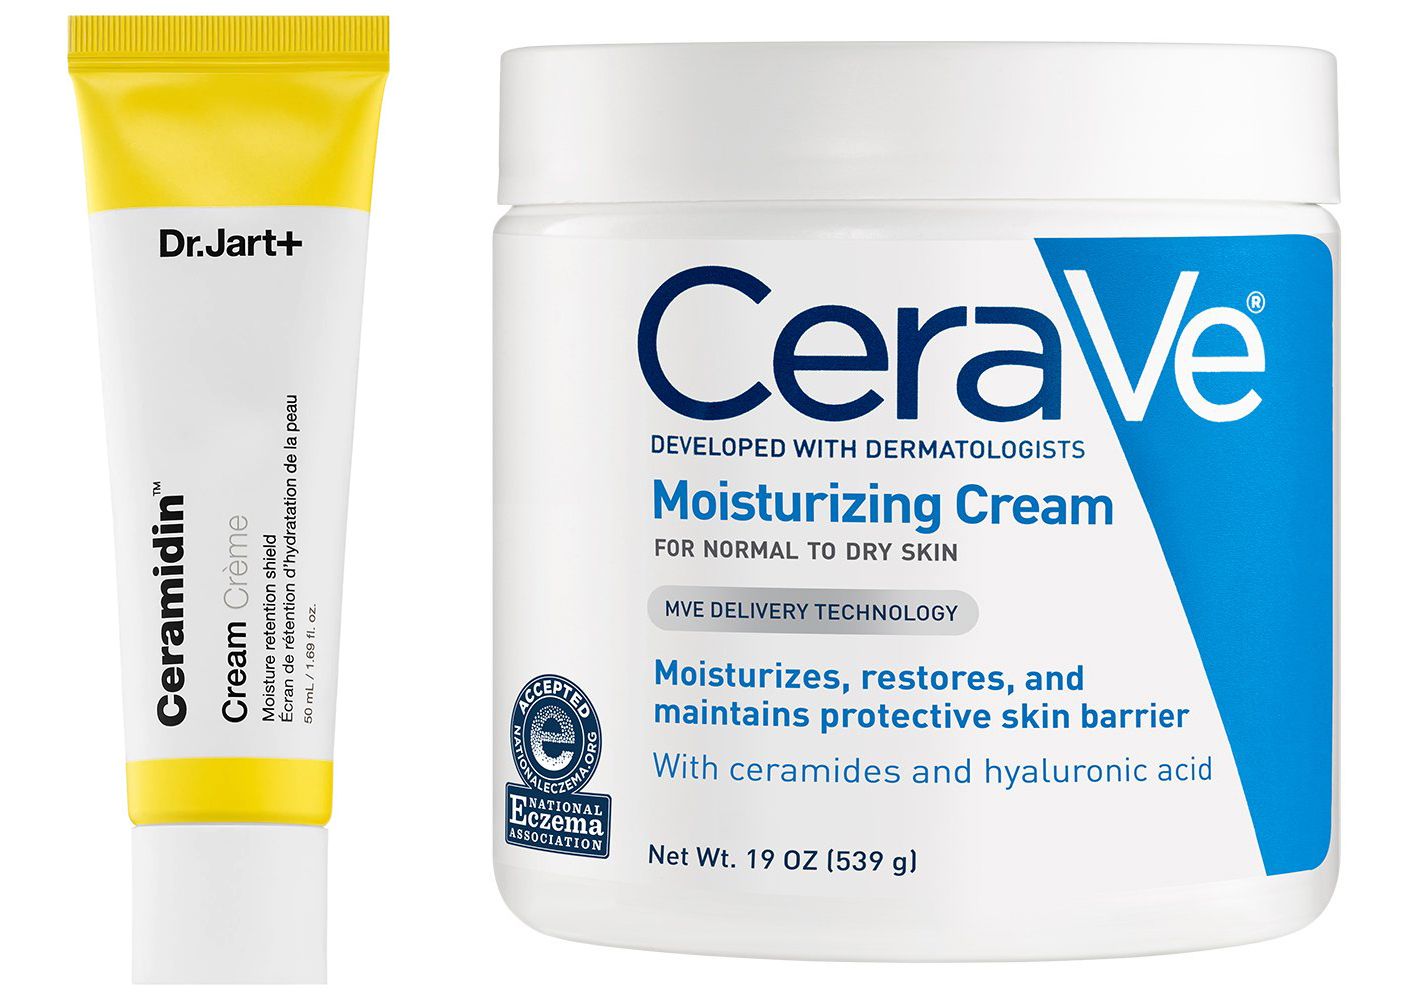 Dr. Jart + Ceramidin Cream vs CeraVe Moisturizing Cream